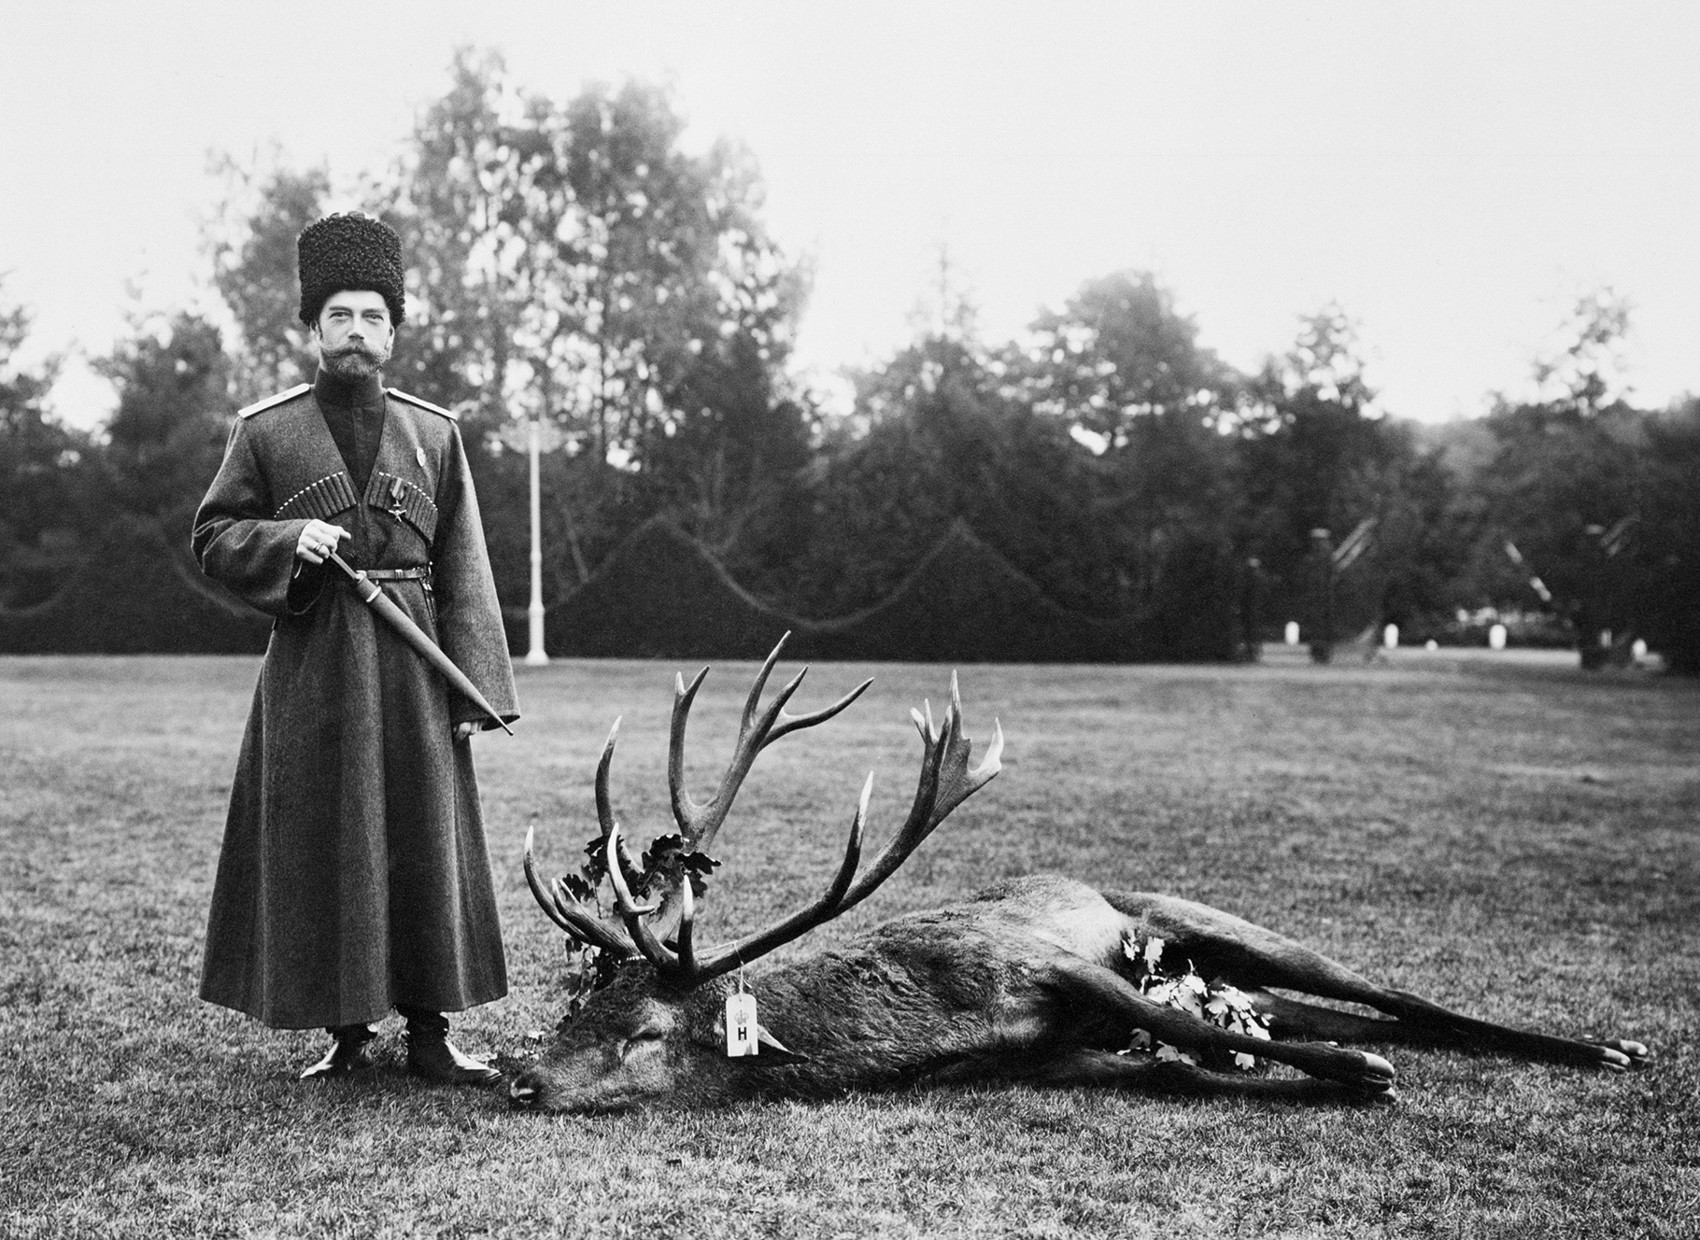 Nicholas II hunting, 1910s